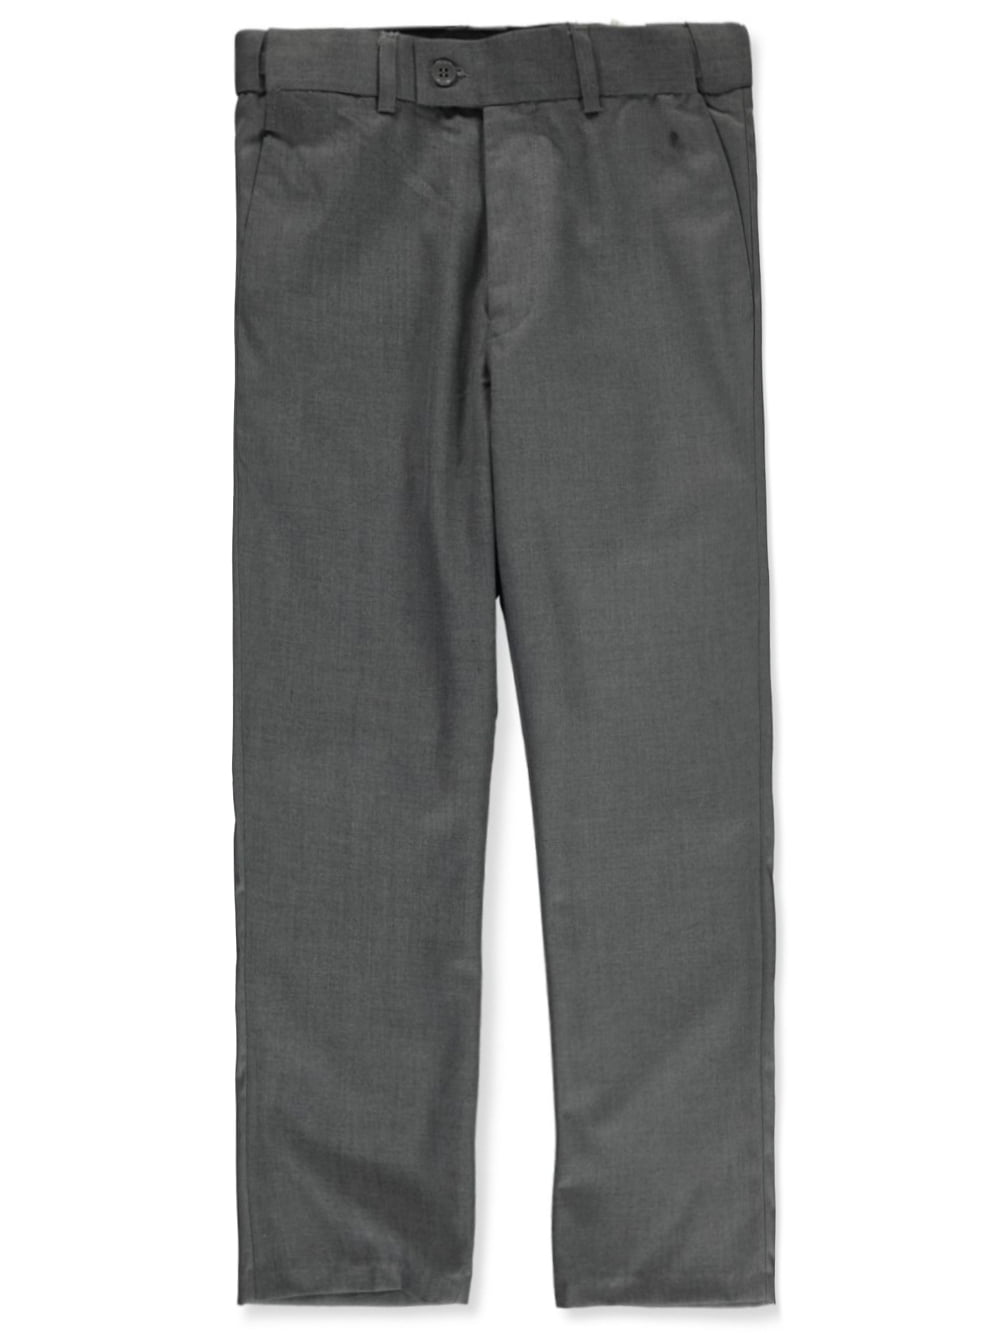 ARMANDO MARTILLO Boys HUSKY SLIM LEG Stretch KNIT Microfiber Blend Dress  Pants - Boytique %